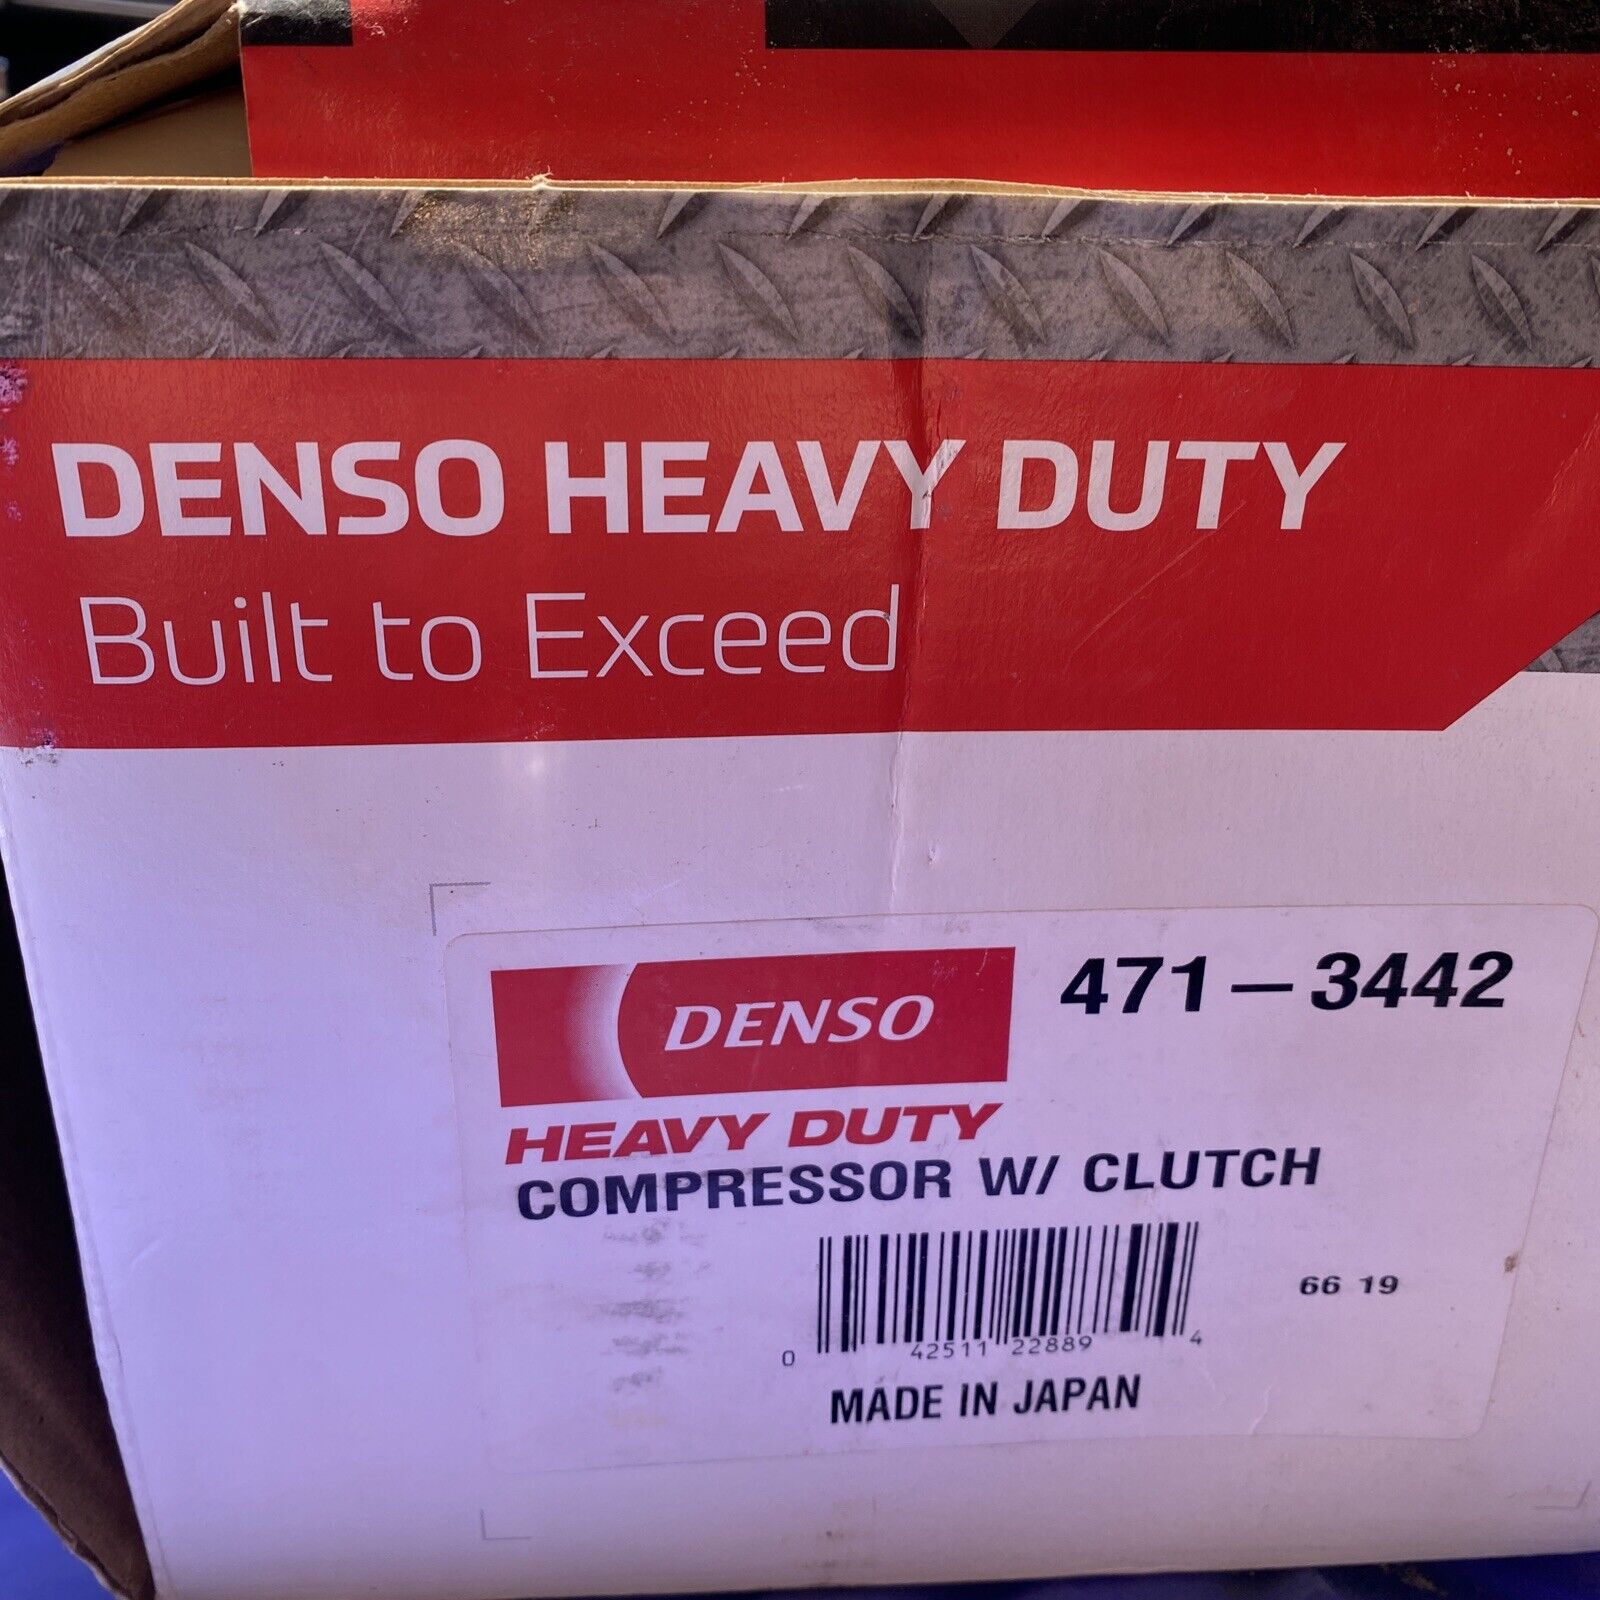 DENSO AC Compressor 471-3442, Denso Part Number 471-3442 AC Compressor W/ CLUTCH